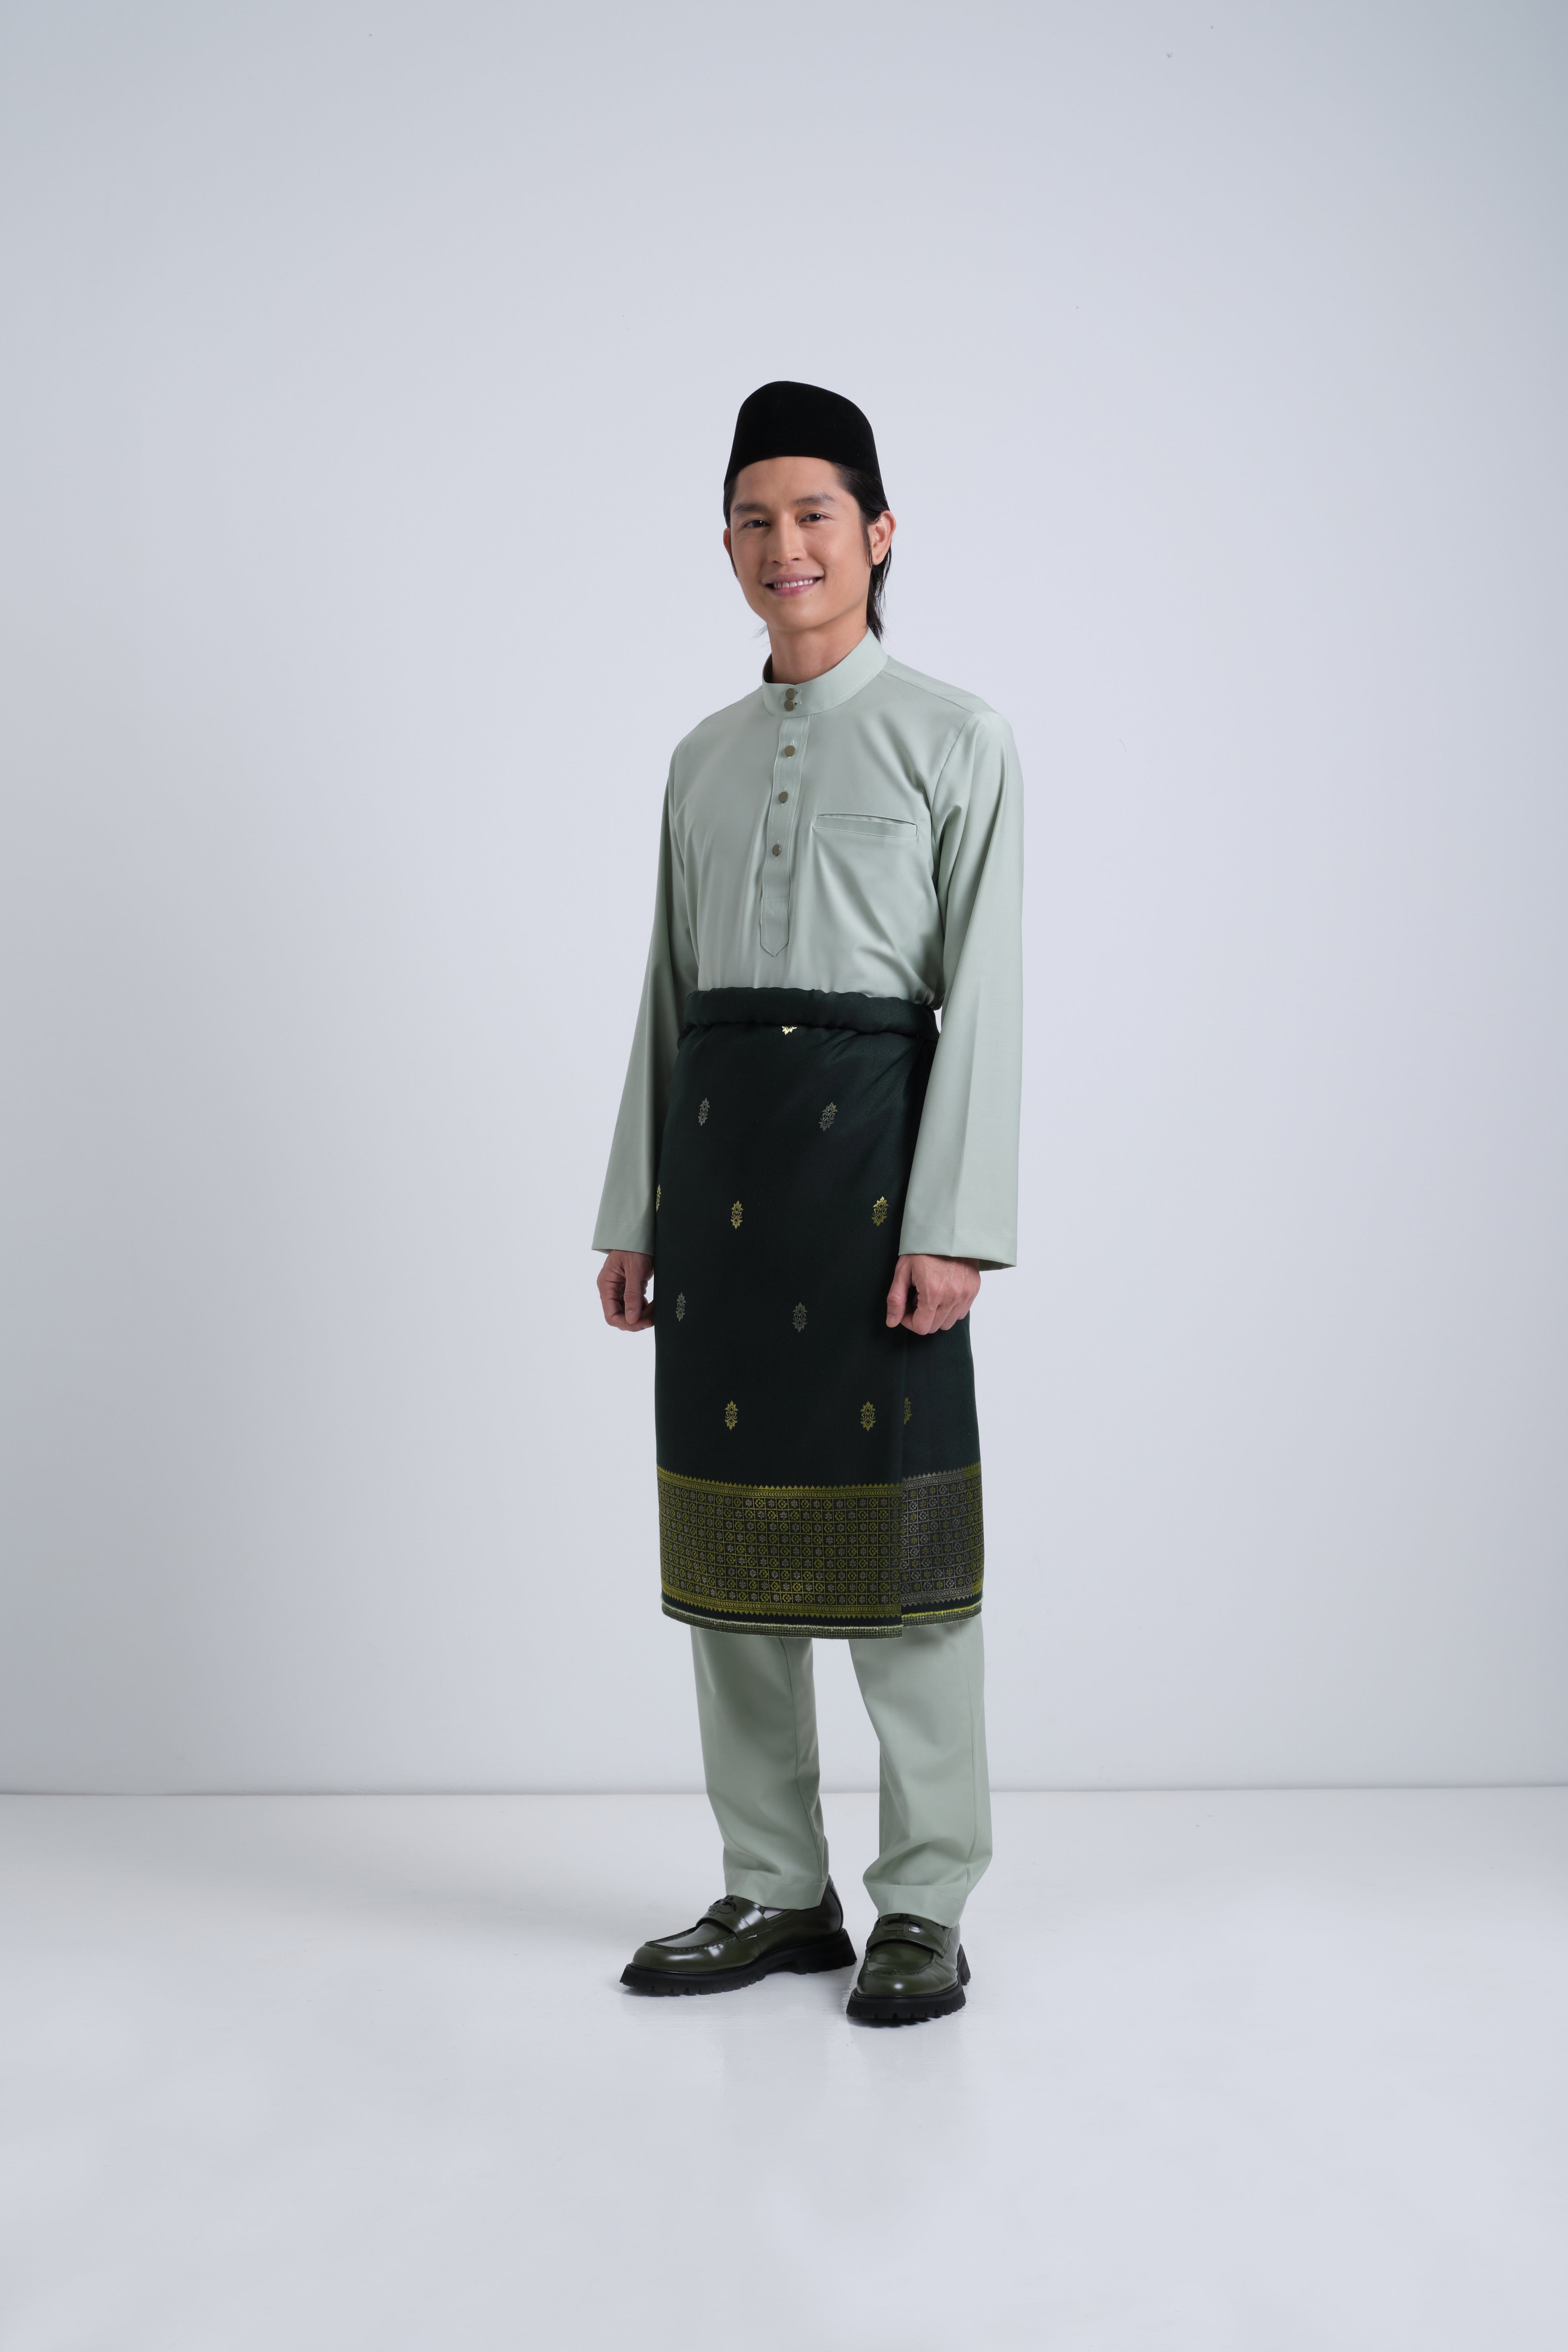 Patawali Baju Melayu Cekak Musang - Mint Green